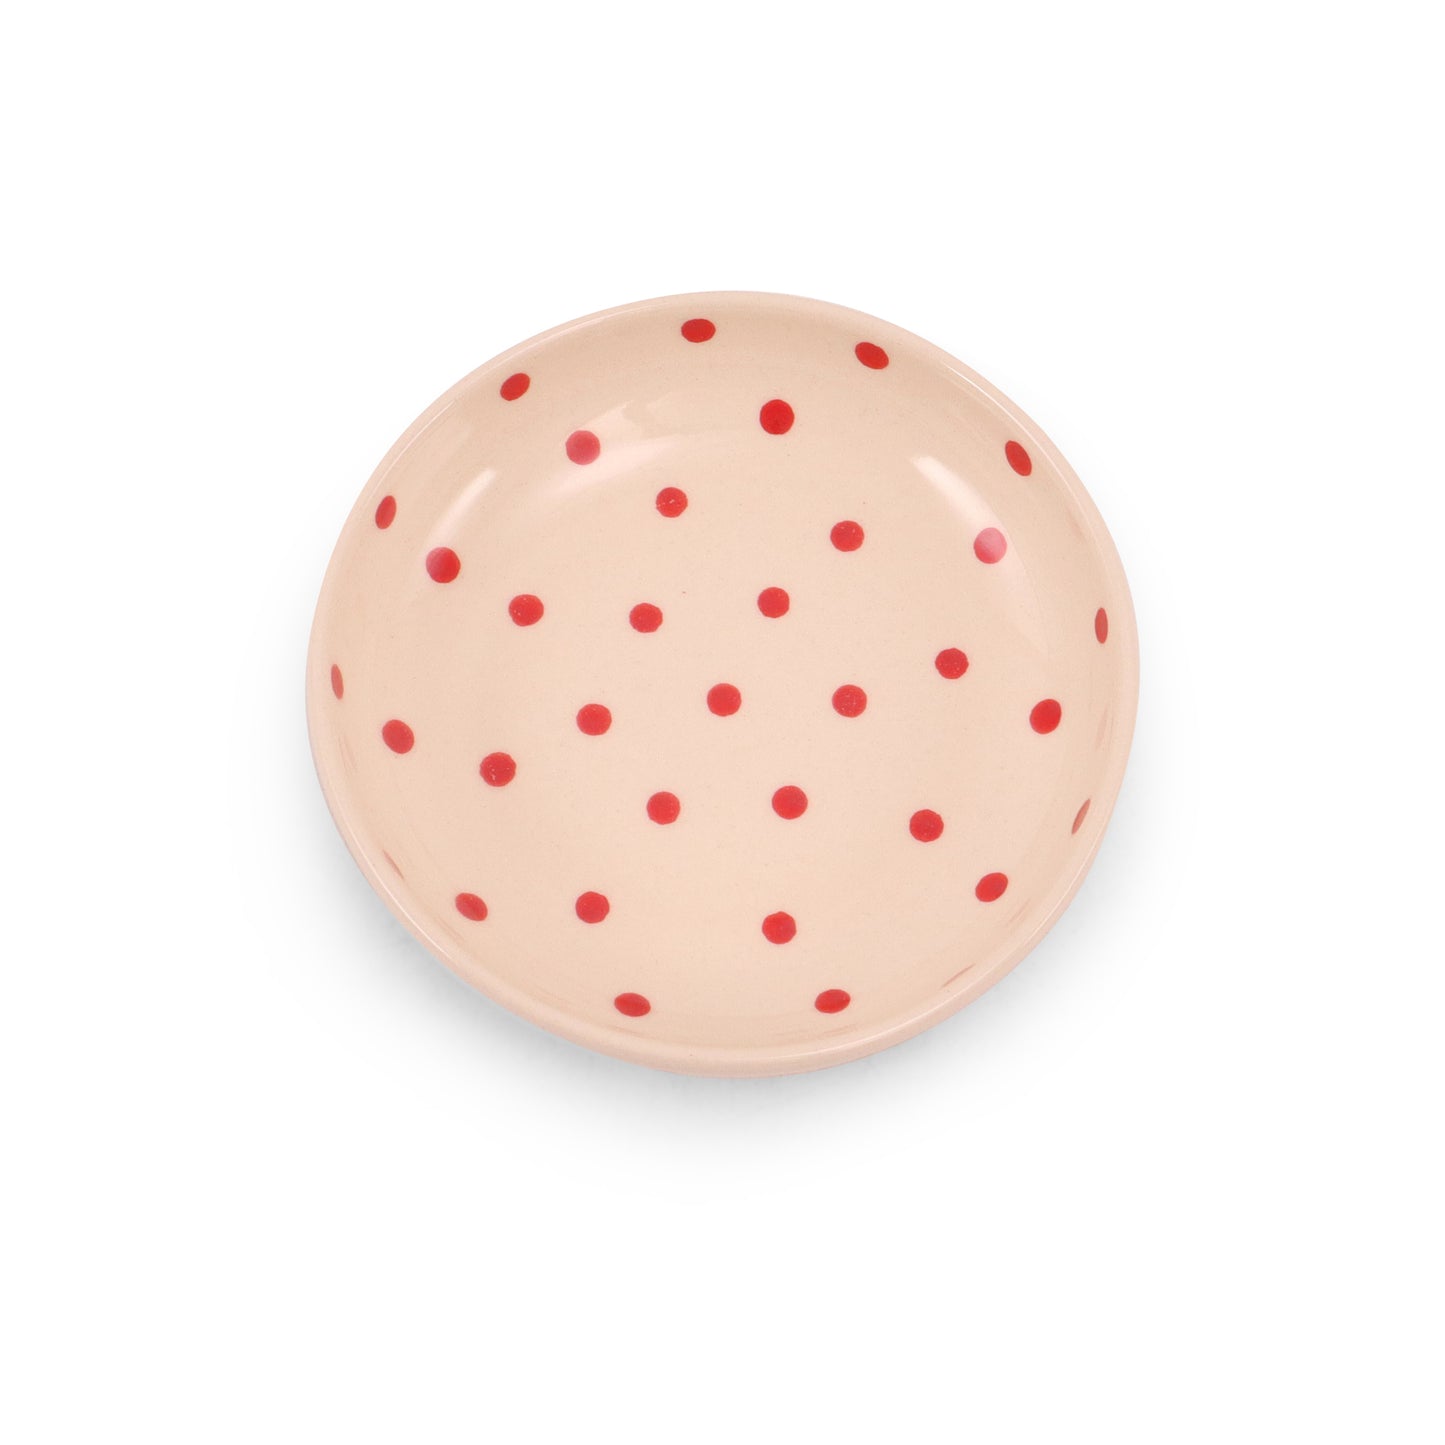 5.5" Shallow Bowl. Pattern: Red Polka Dot